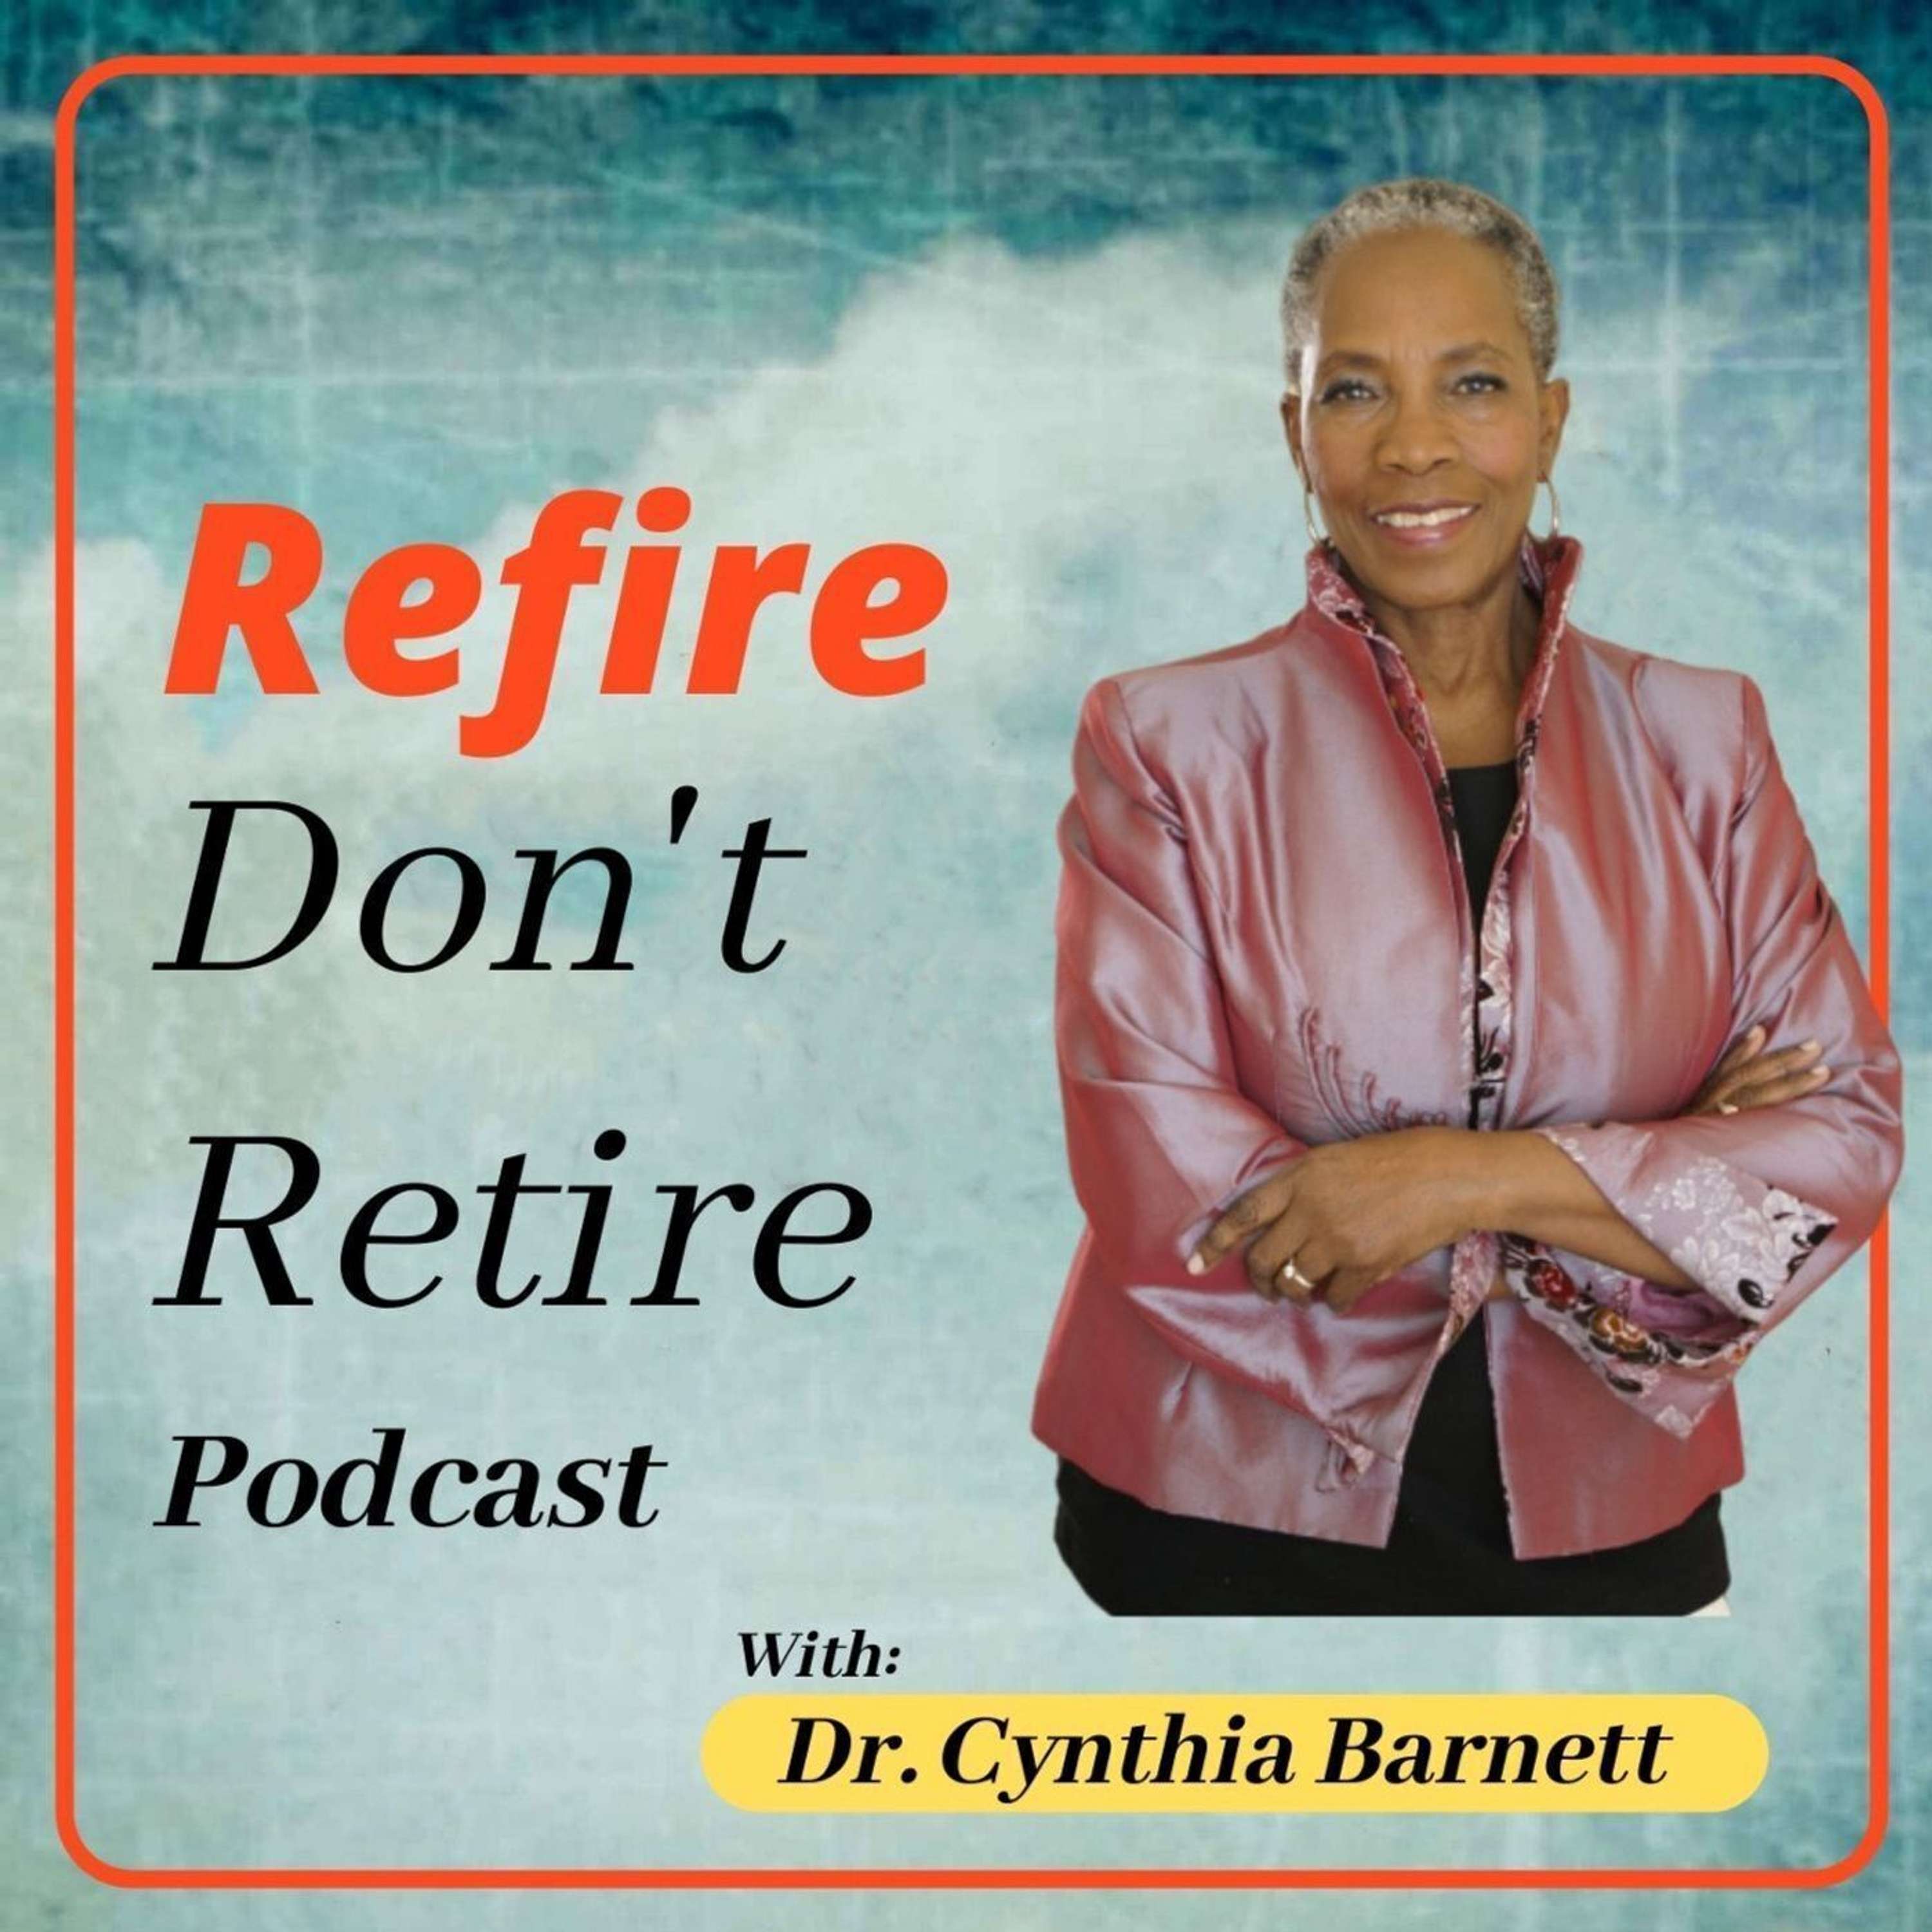 Refire Don't Retire